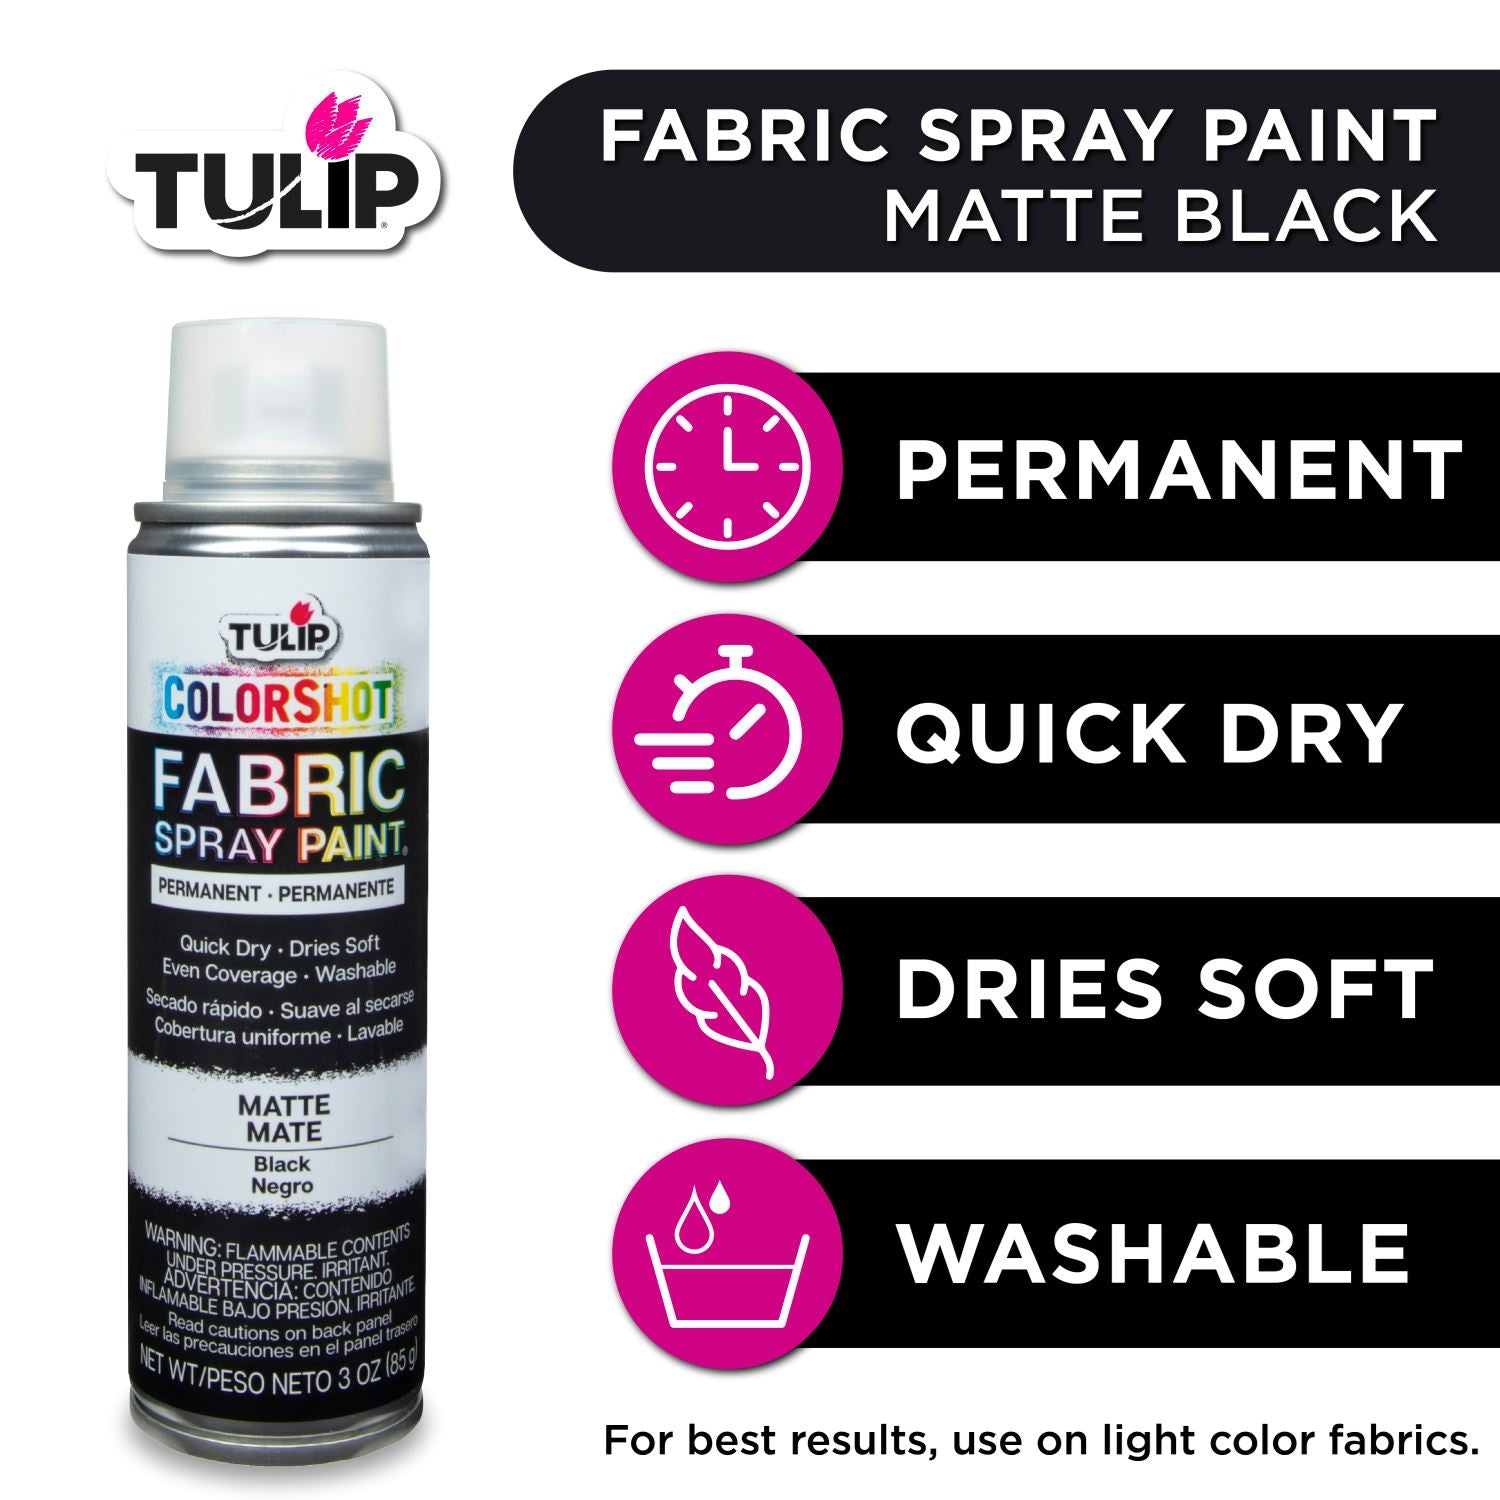 Tulip Fabric Spray Paint 4oz-Black, 1 - Harris Teeter